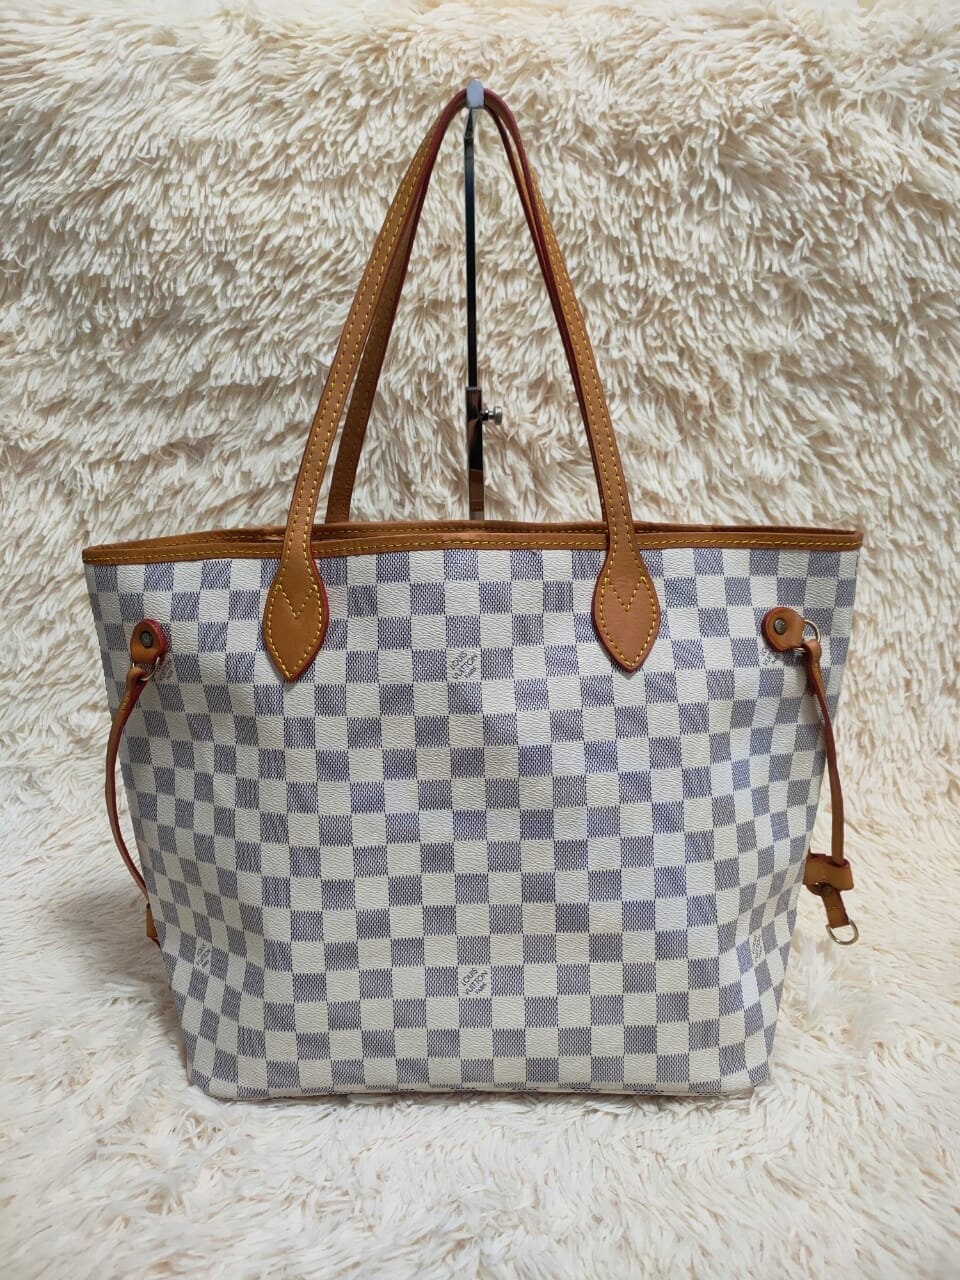 Buy Used Louis Vuitton Handbag Online In India -  India